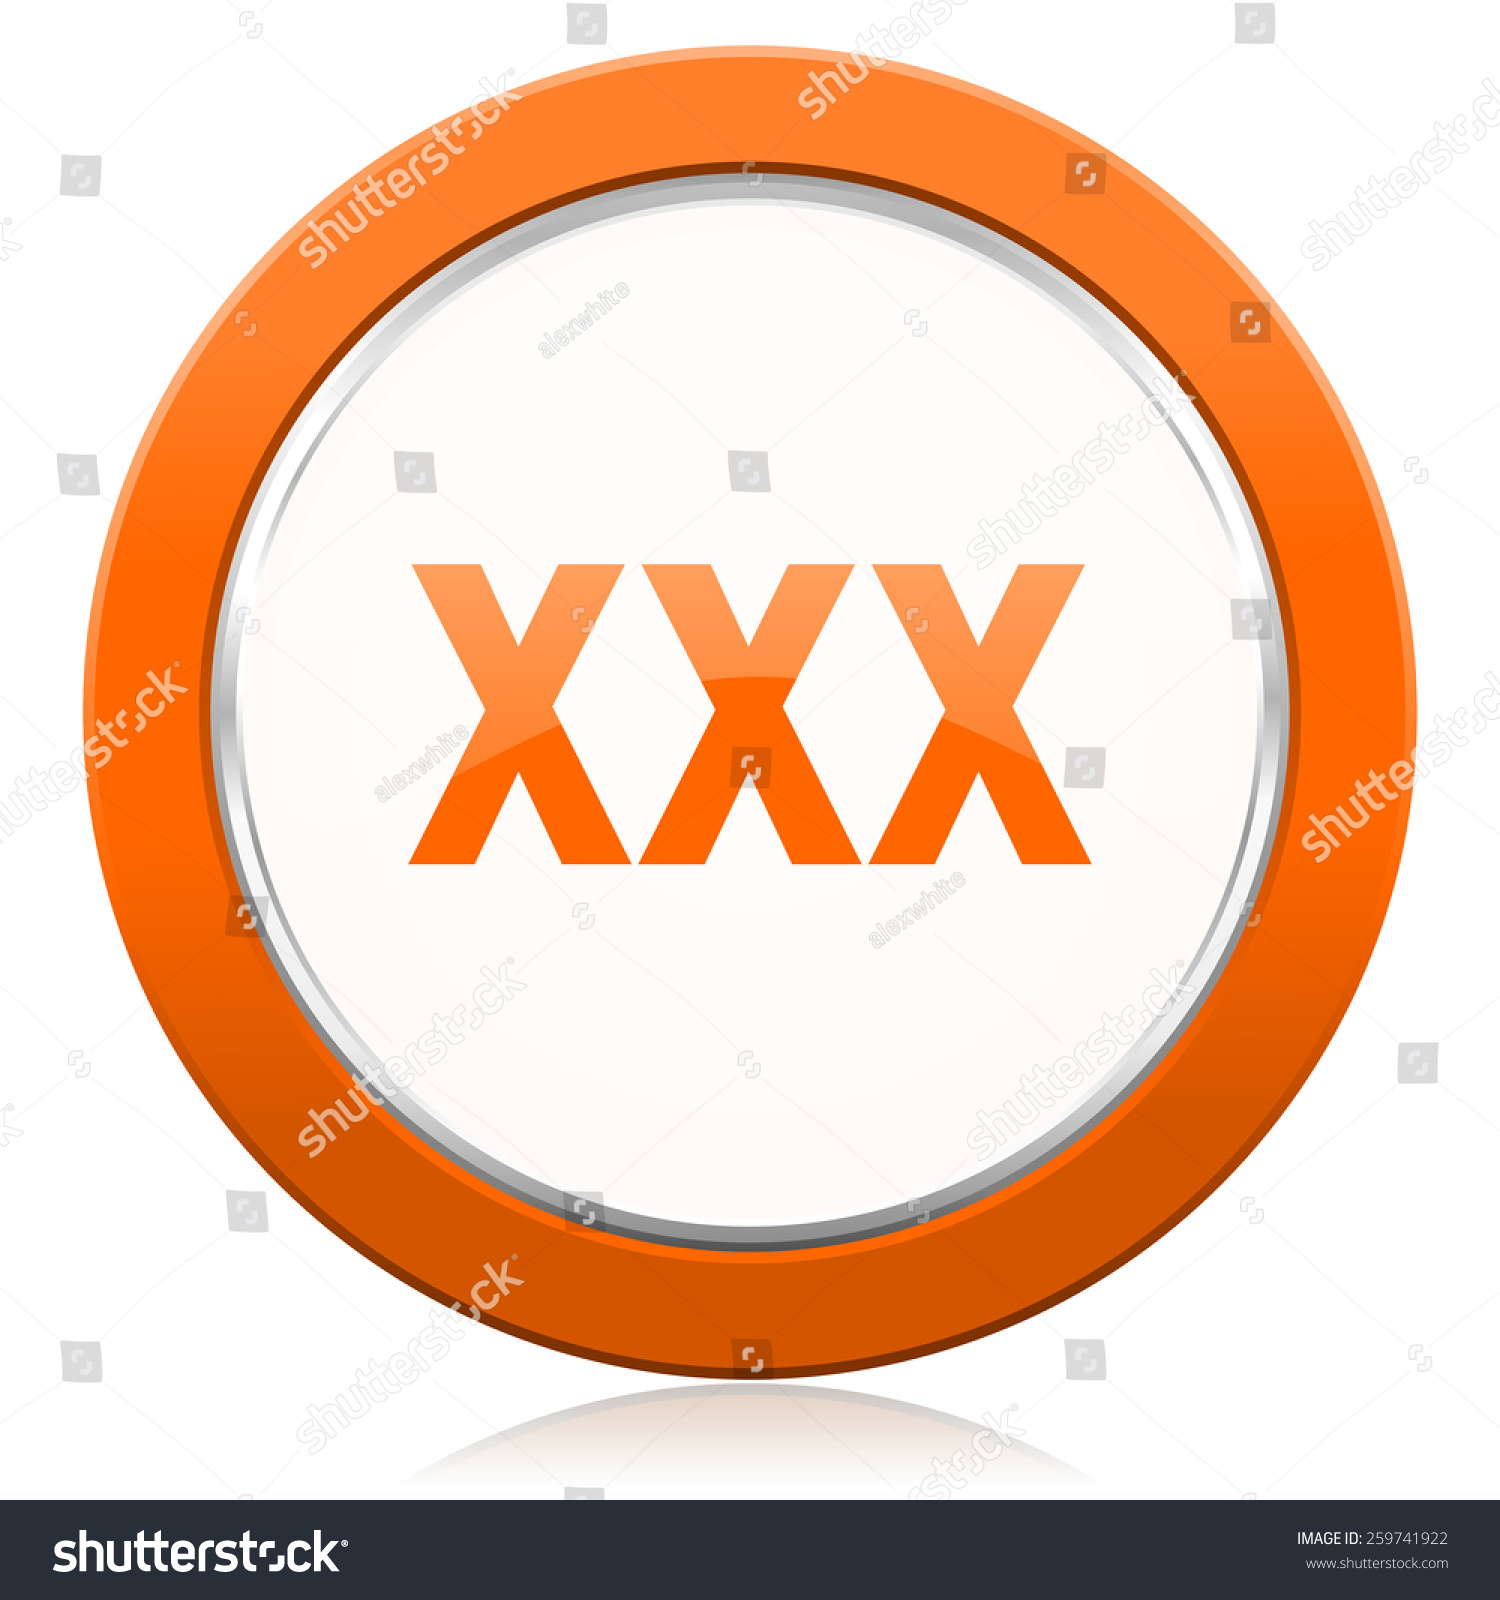 Xxx Objects 44